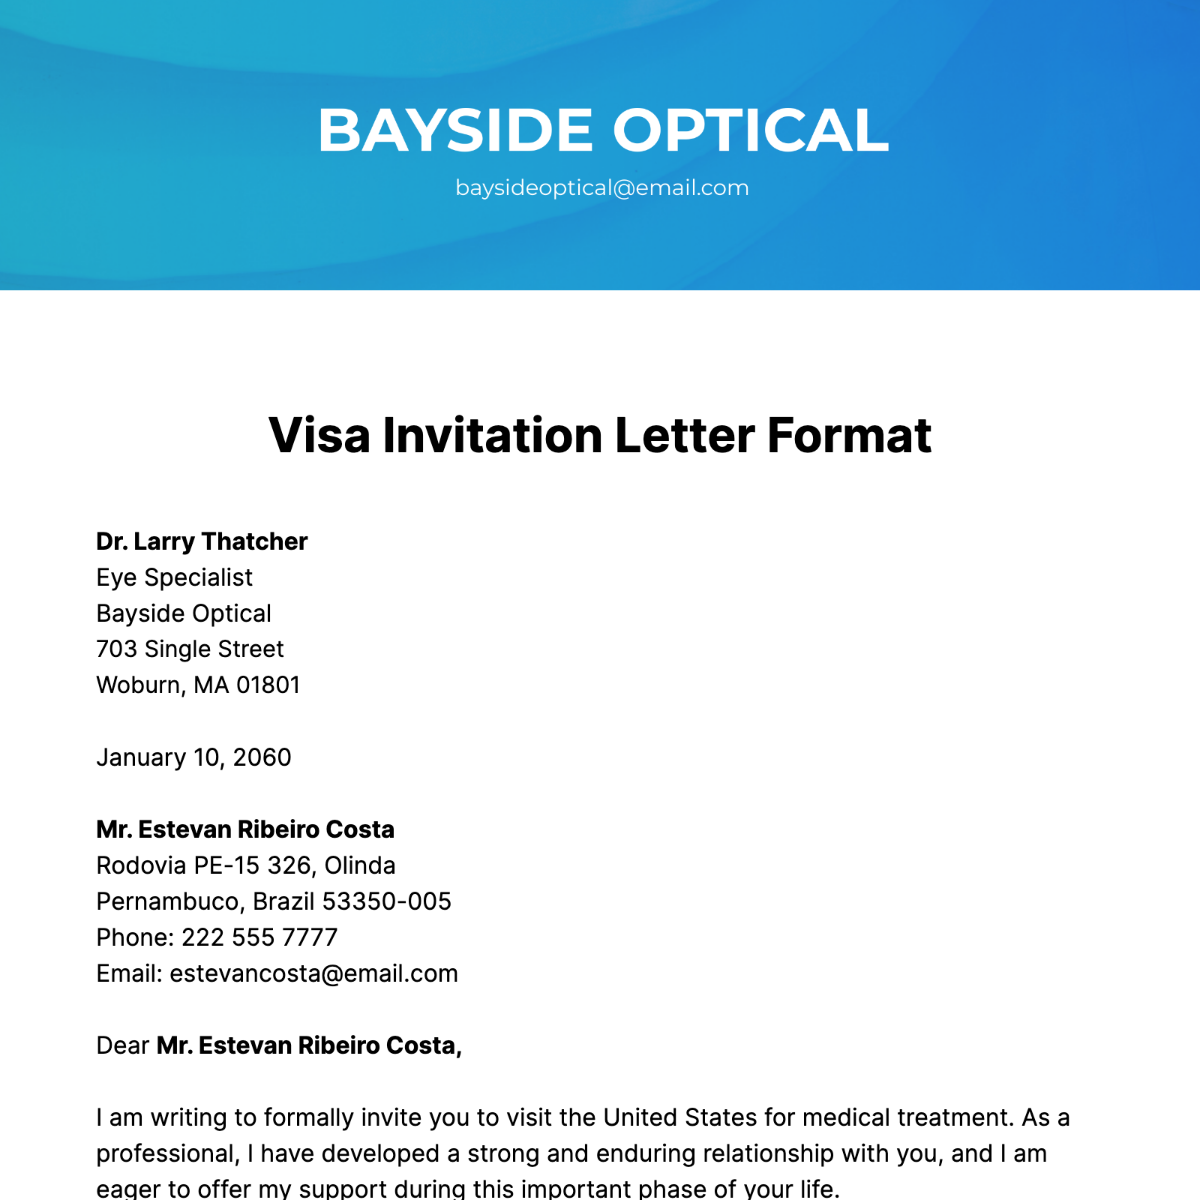 Visa Invitation Letter Format Template